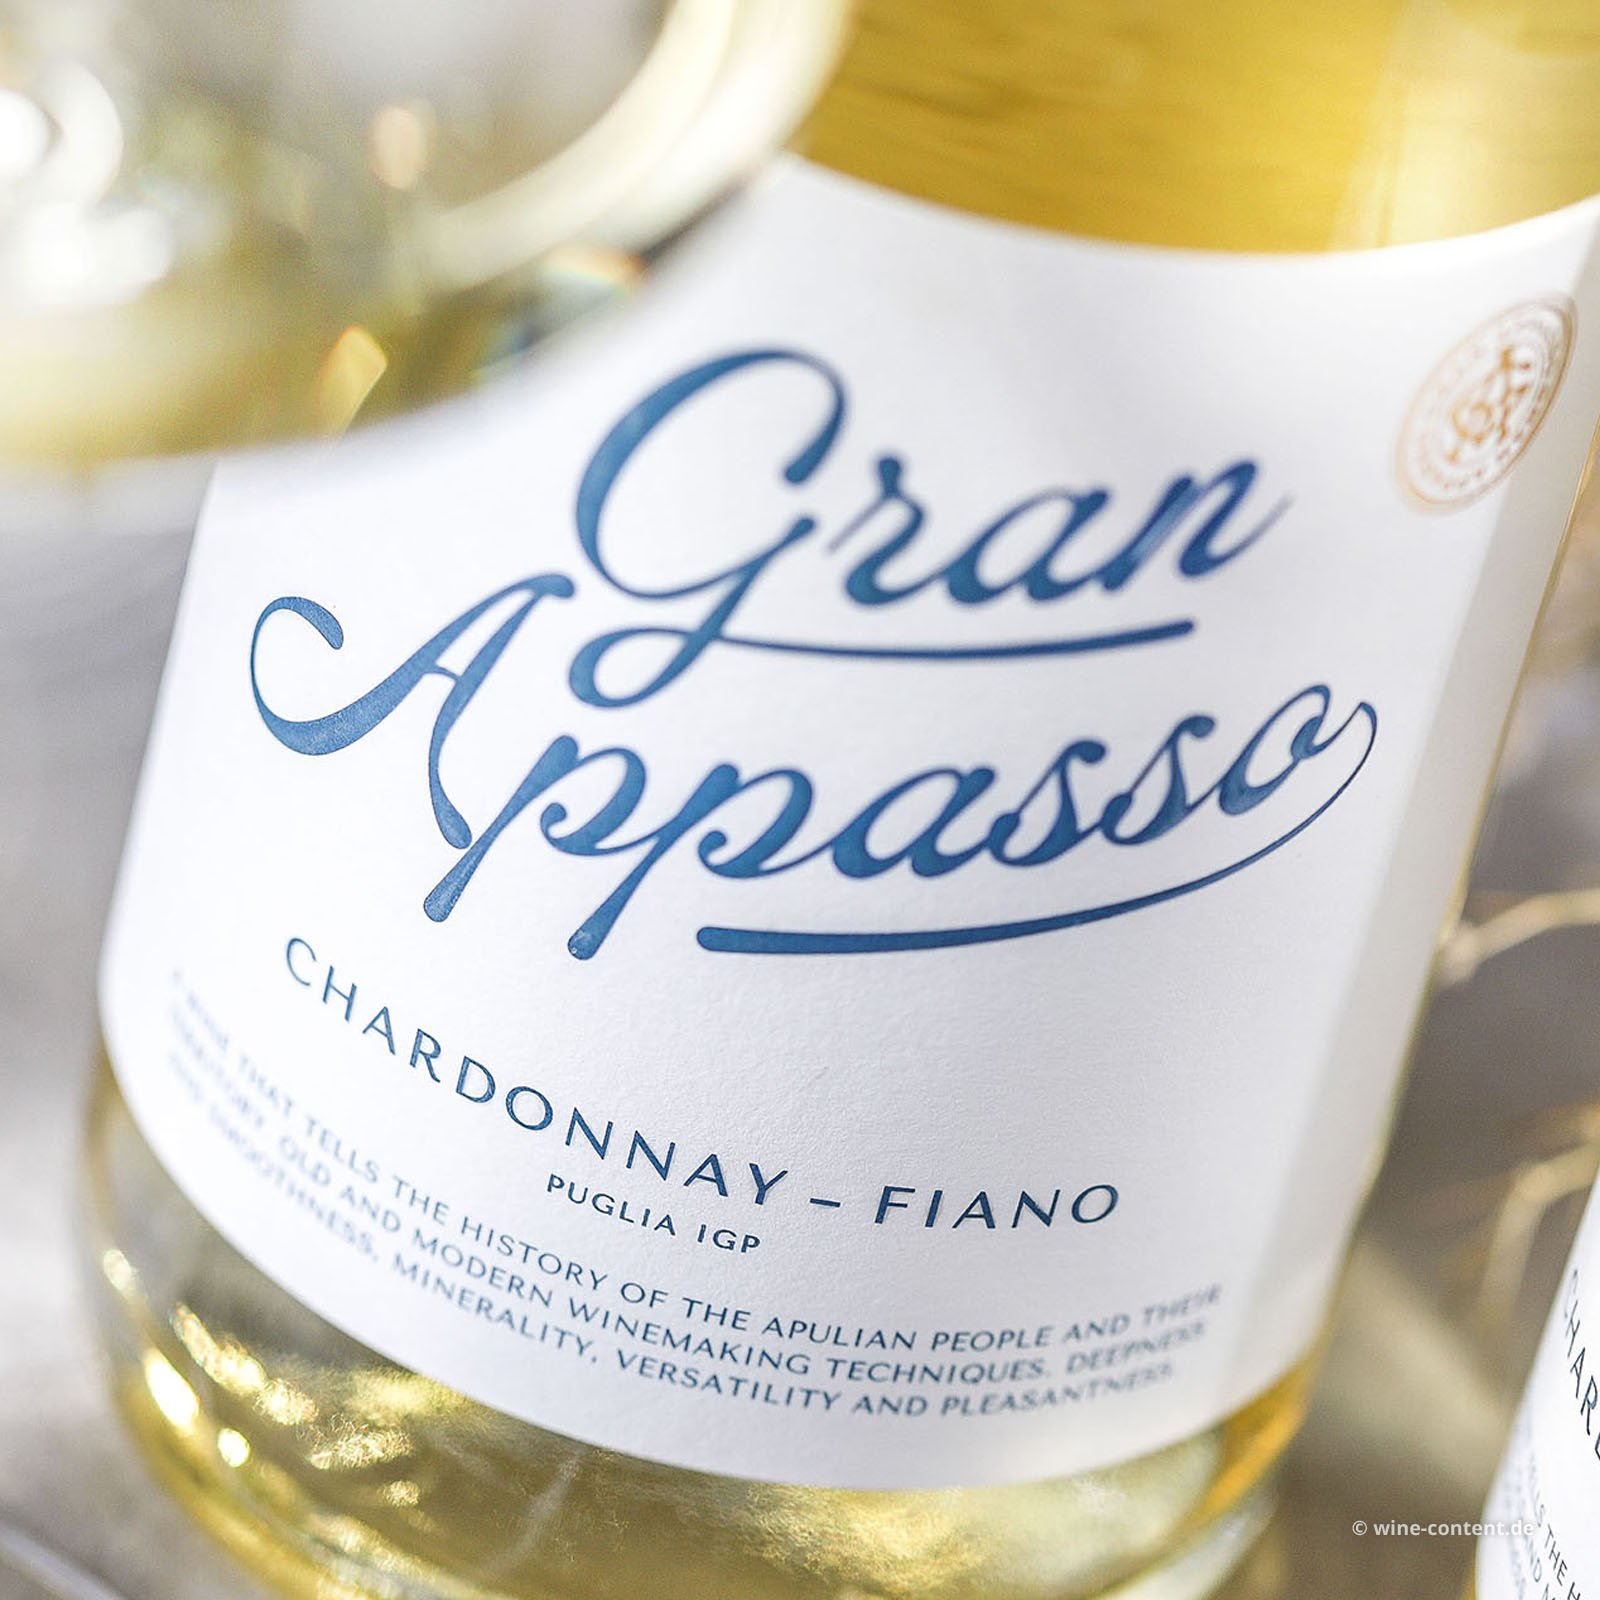 Chardonnay-Fiano 2023 Gran Appasso